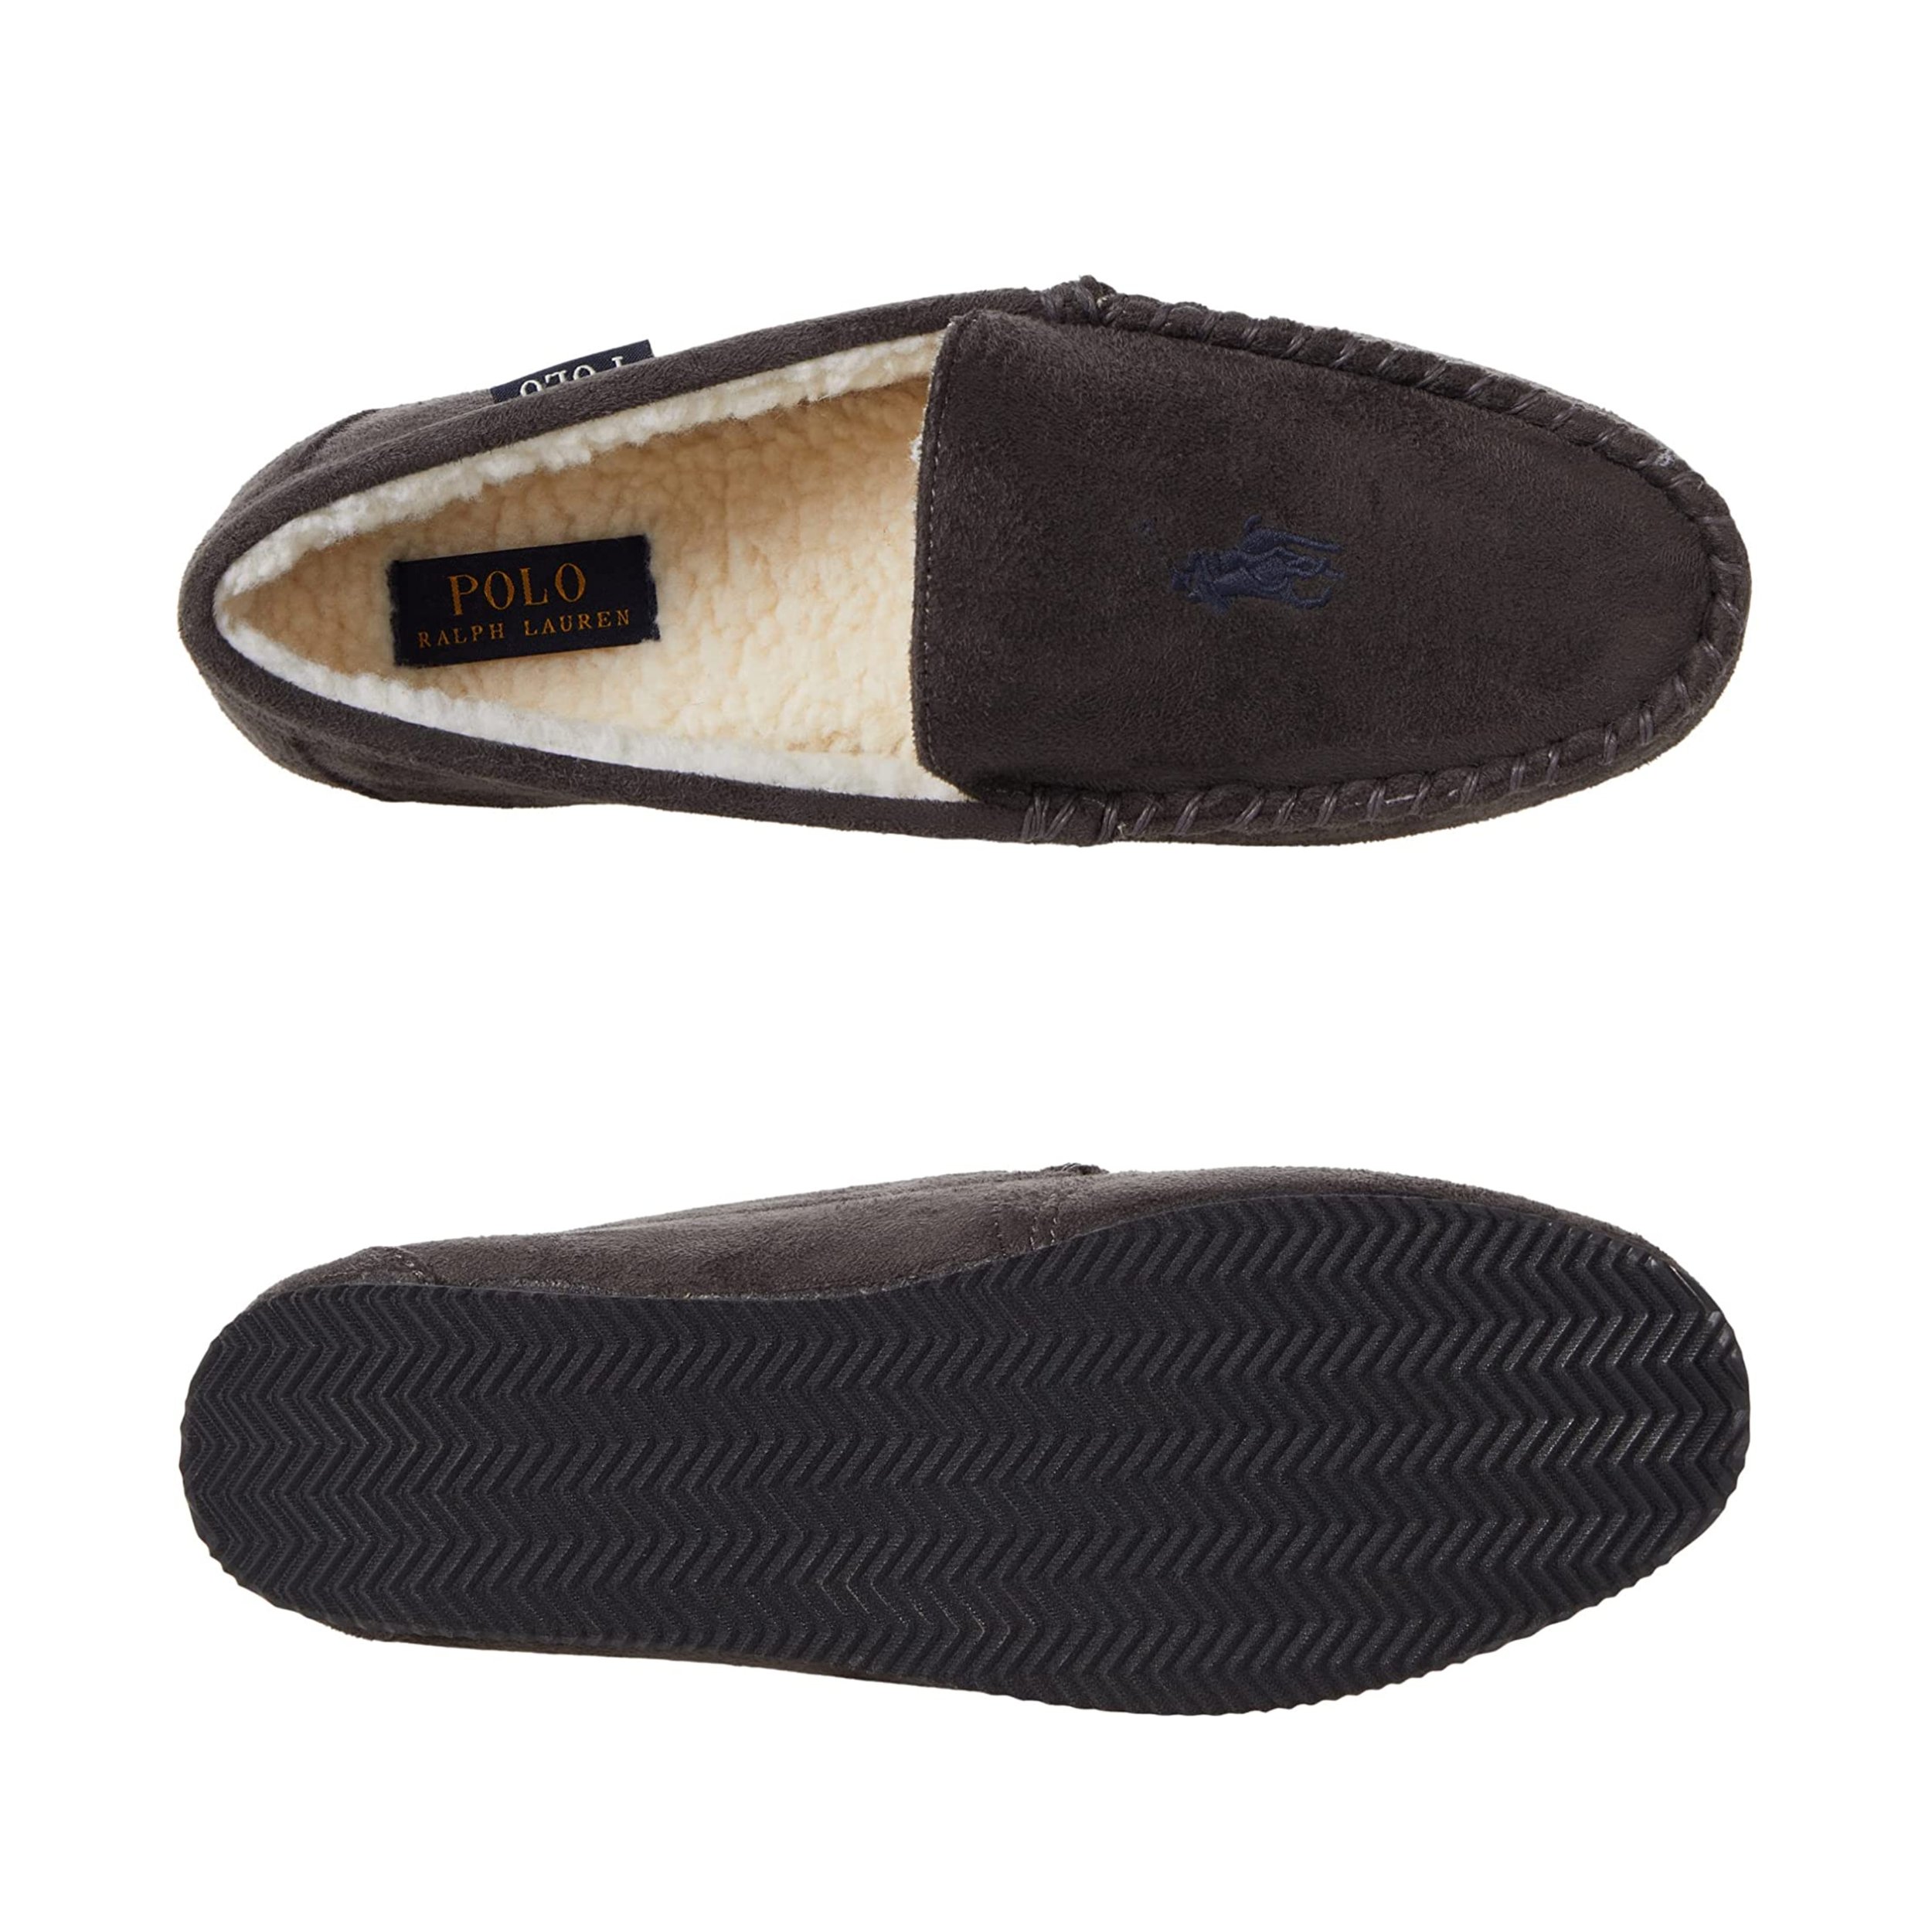 On Sale: Polo Ralph Lauren Dezi Moccasin Slipper 